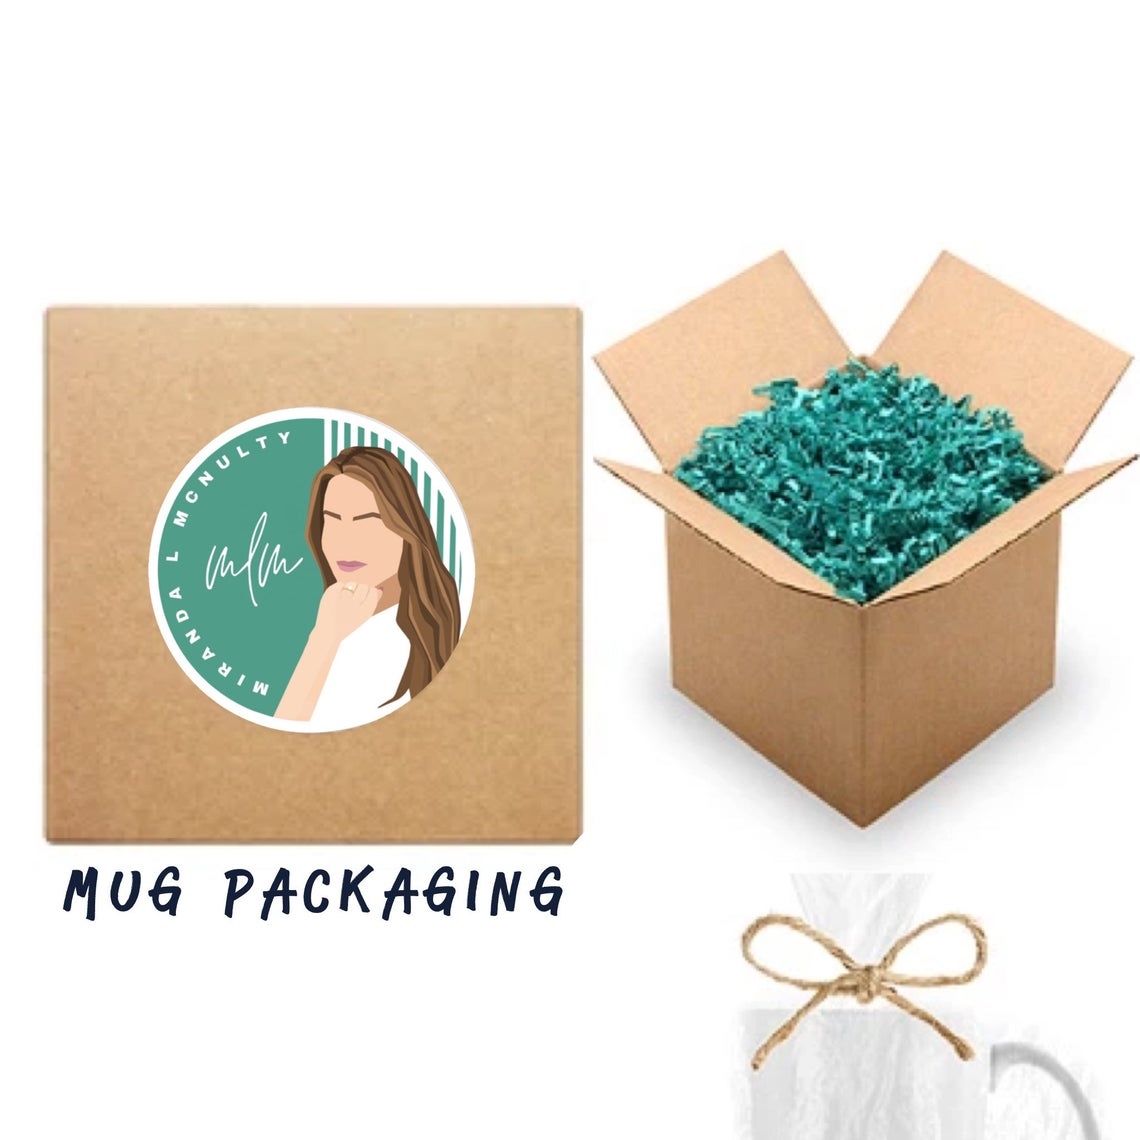 Packaging for mugs by MirandaLMcNulty